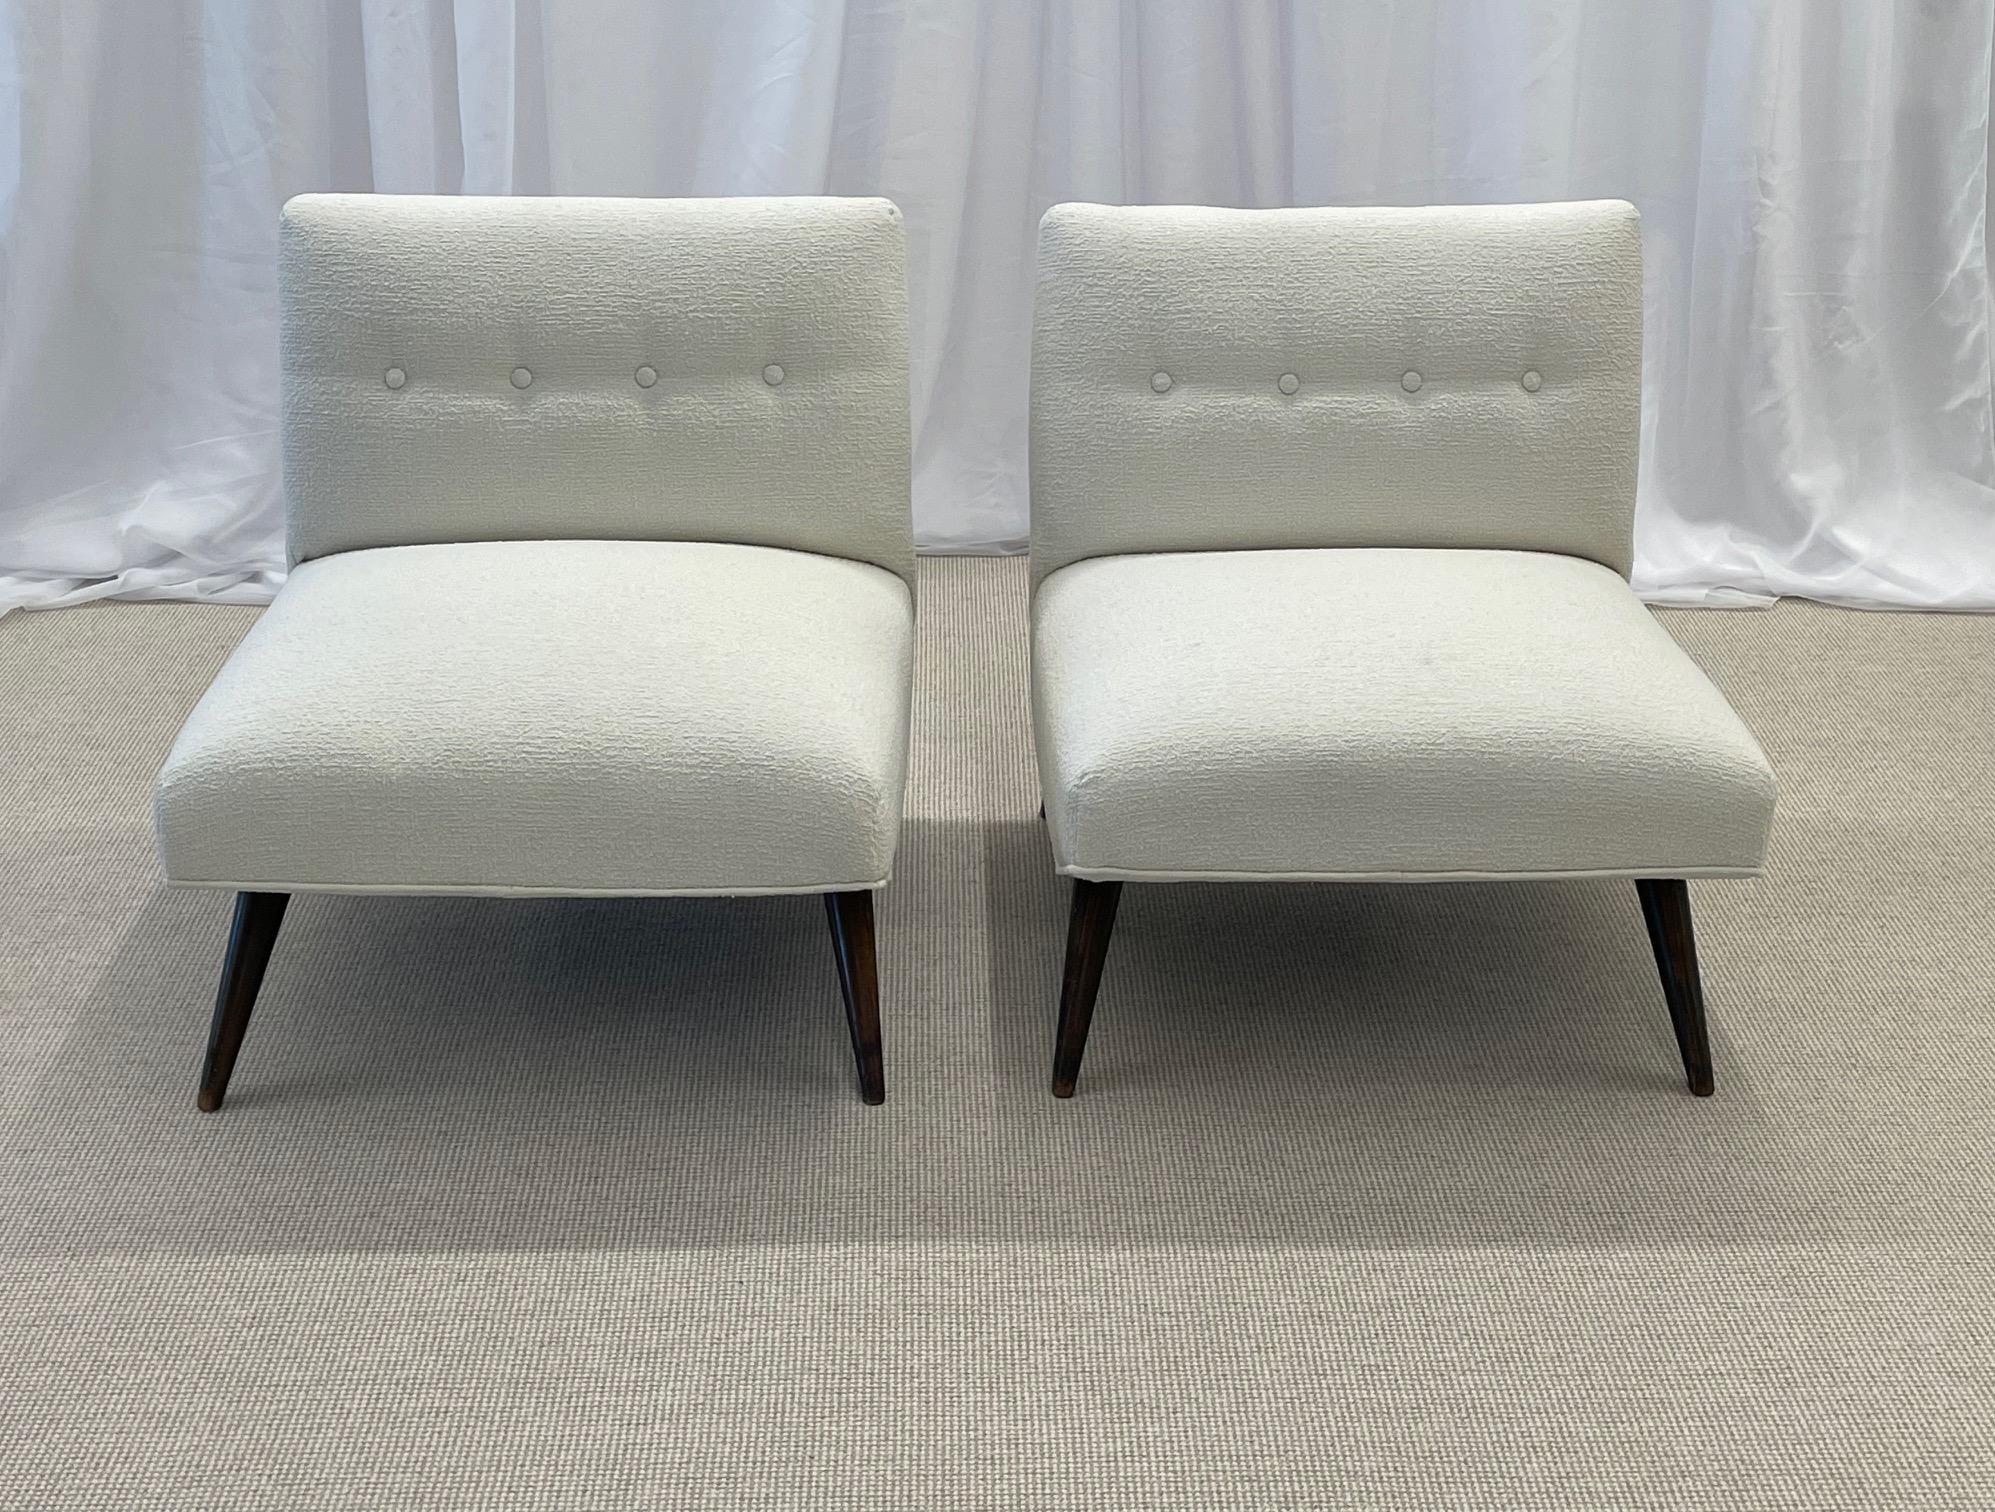 Mid-20th Century Pair of American Mid-Century Modern Slipper Chairs by Paul McCobb, Kravet Bouclé